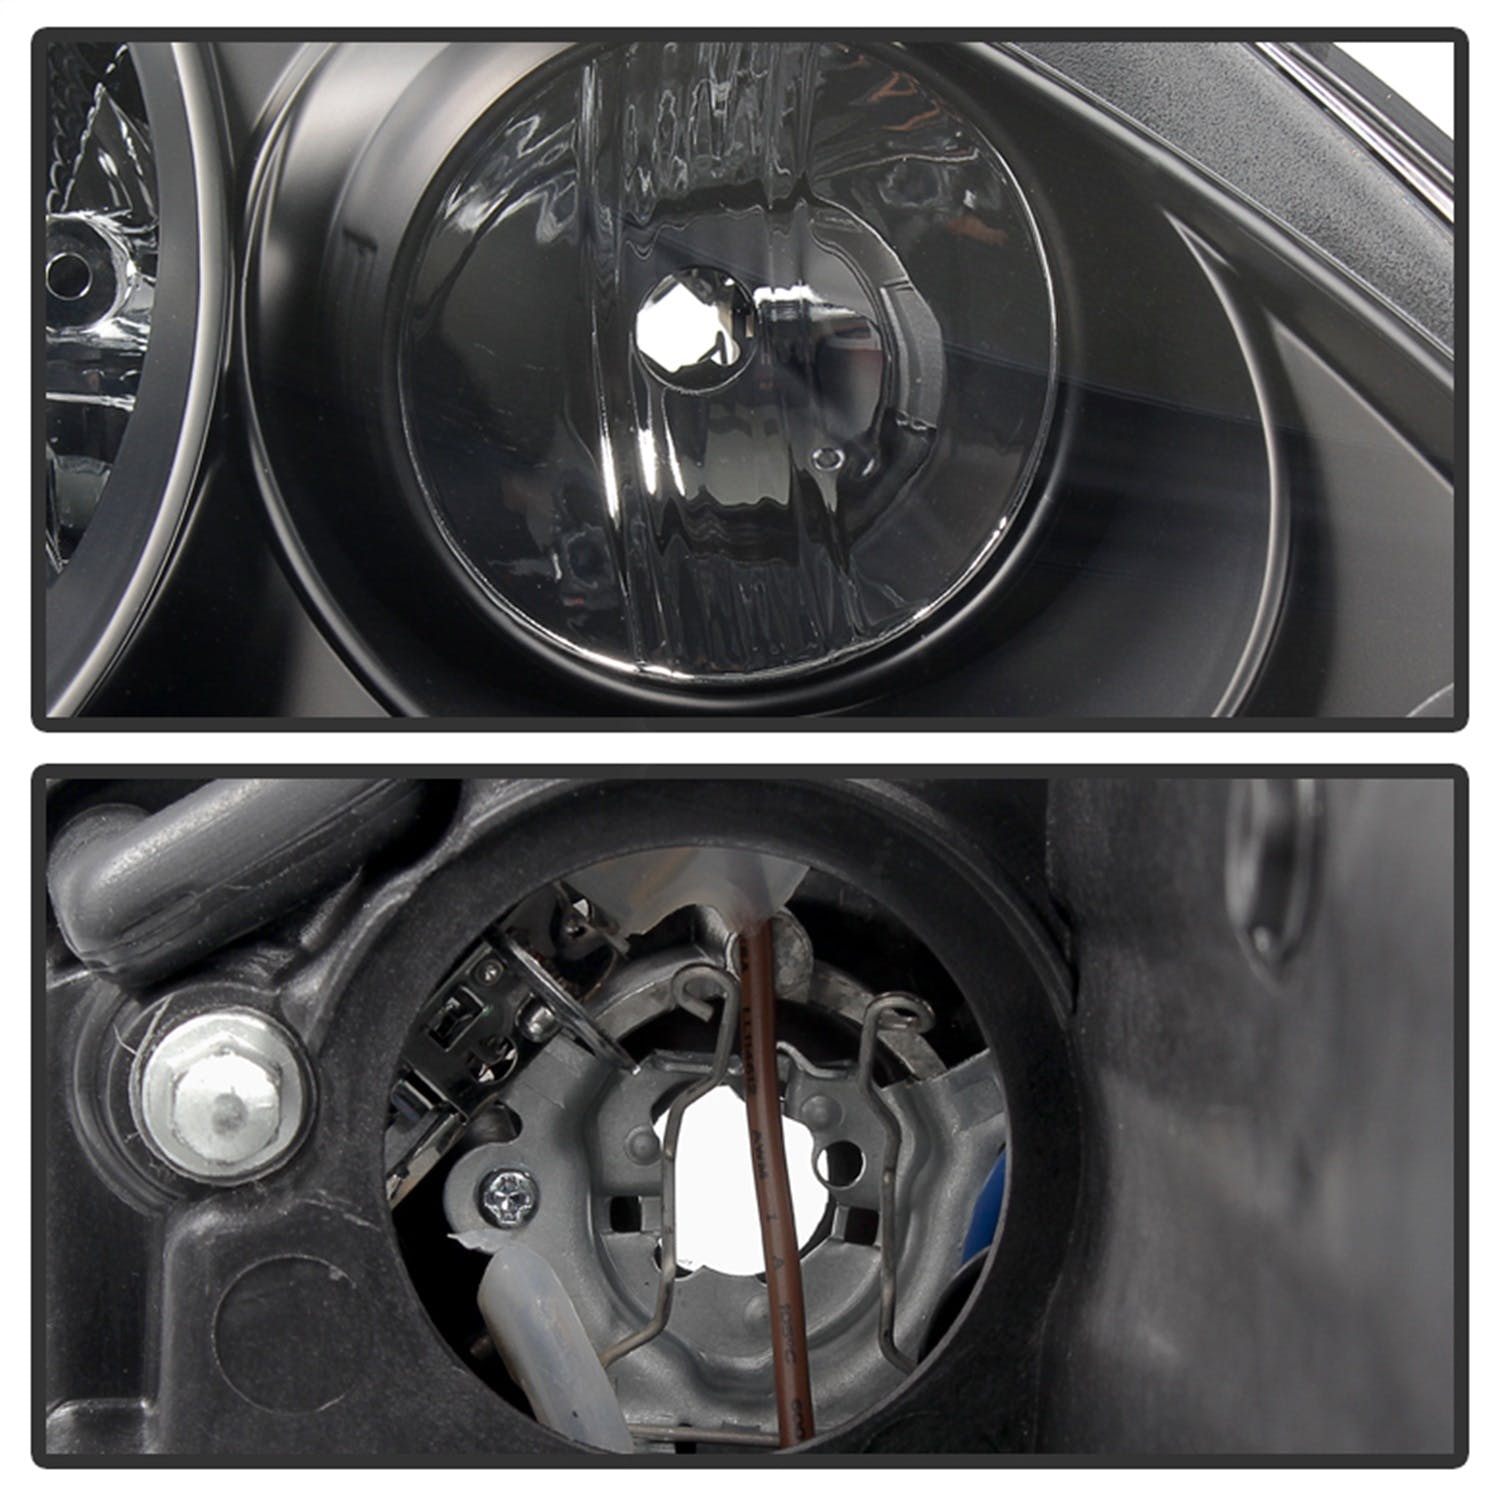 Spyder Auto 5080967 (Spyder) Porsche Cayenne 03-06 Projector Headlights-Xenon/HID Model Only ( Not C